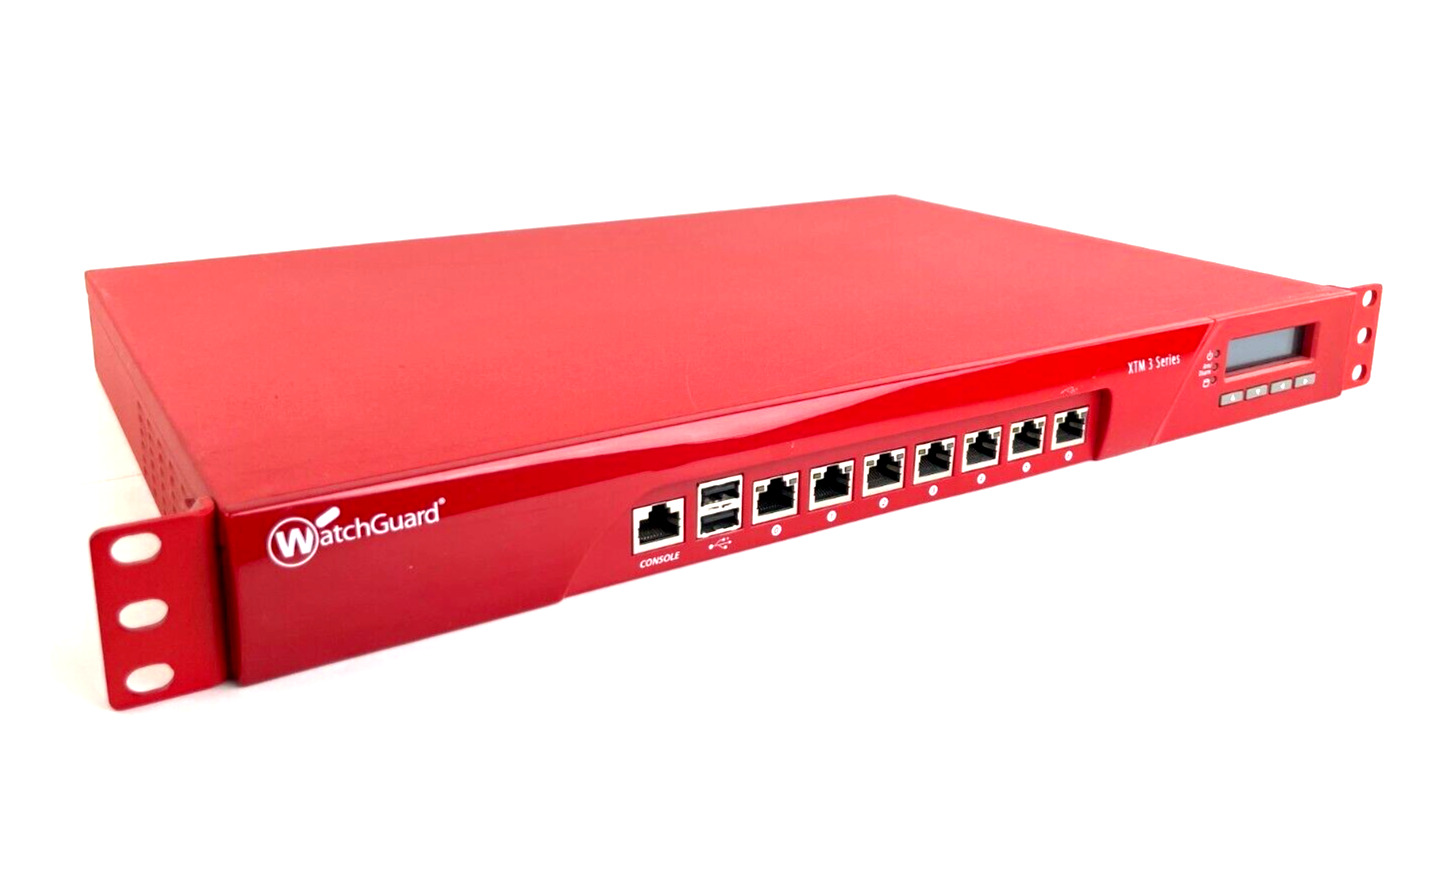 WatchGuard Firewall XTM 3-Series 330 HW Model NC5AE7 Rackmount